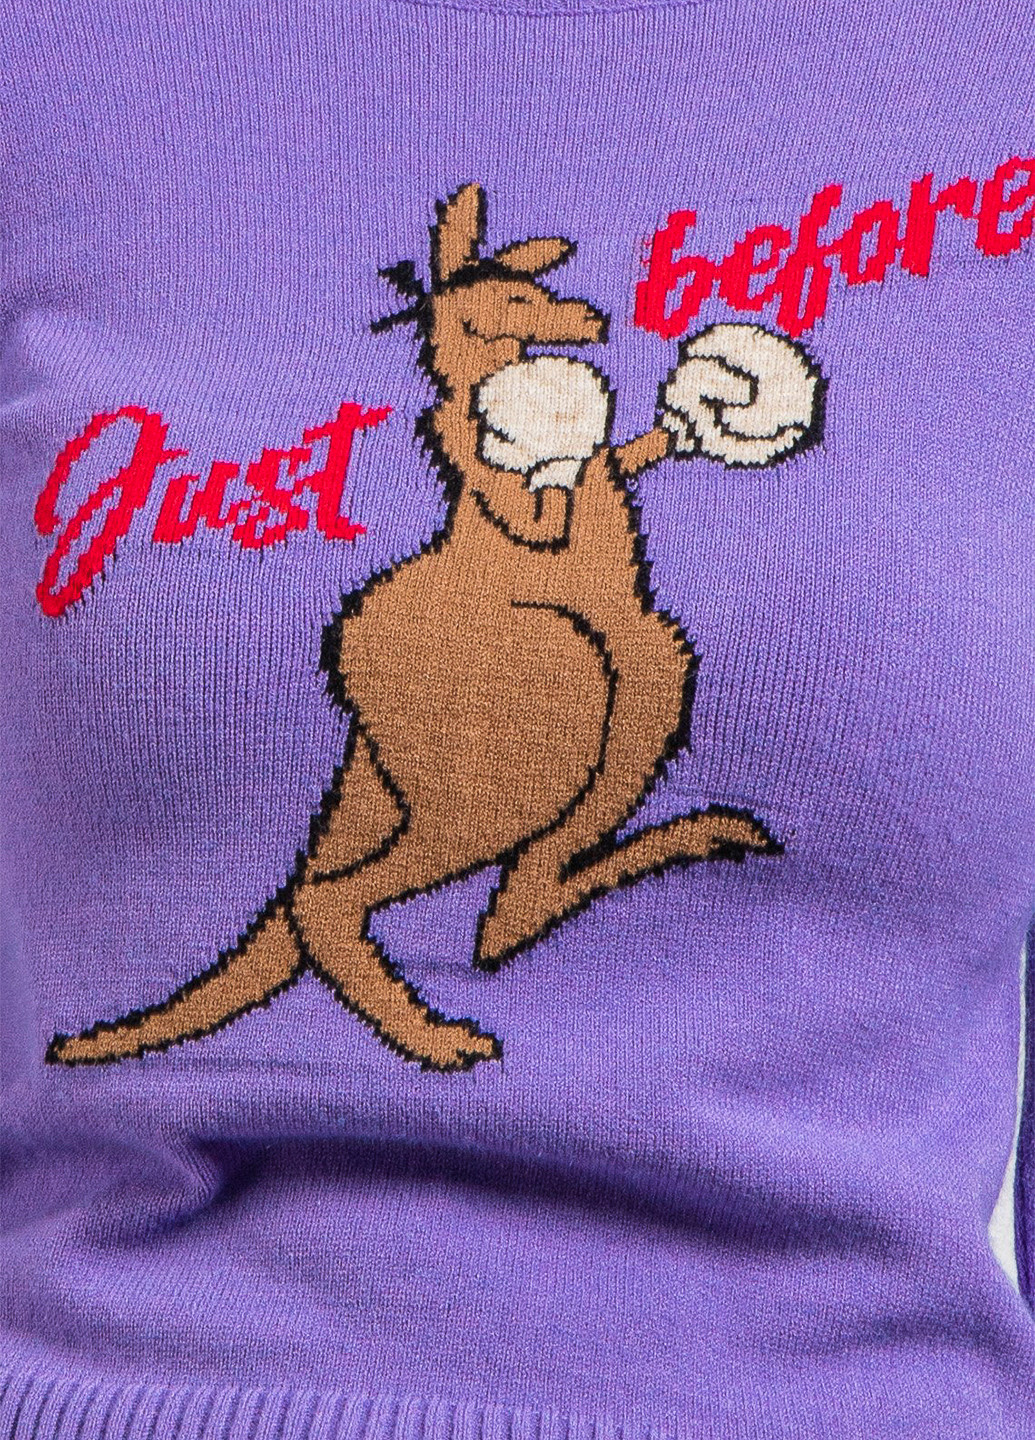 Фиолетовый зимний свитер J.B4 (Just Before)